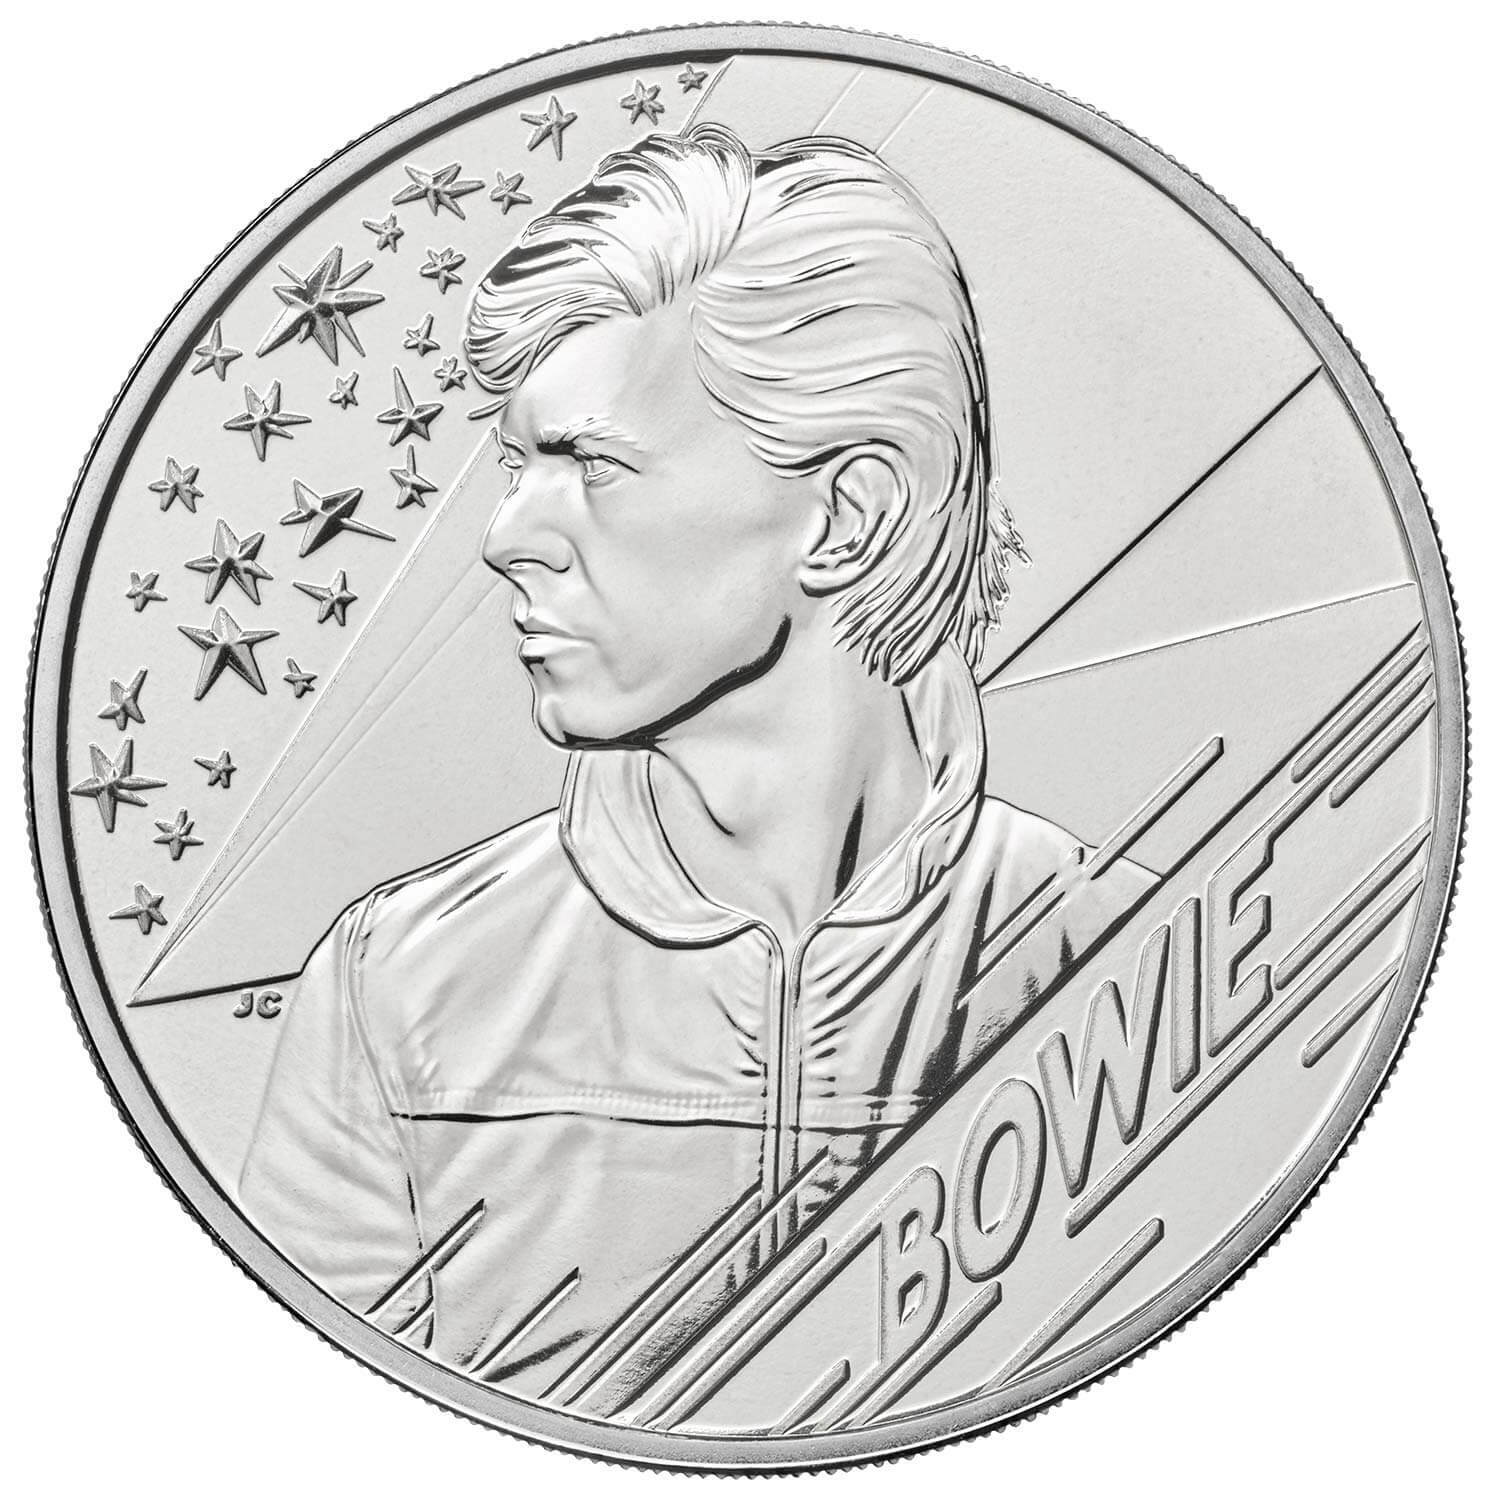 2020 £5 David Bowie Brilliant UNC Coin Edition 1